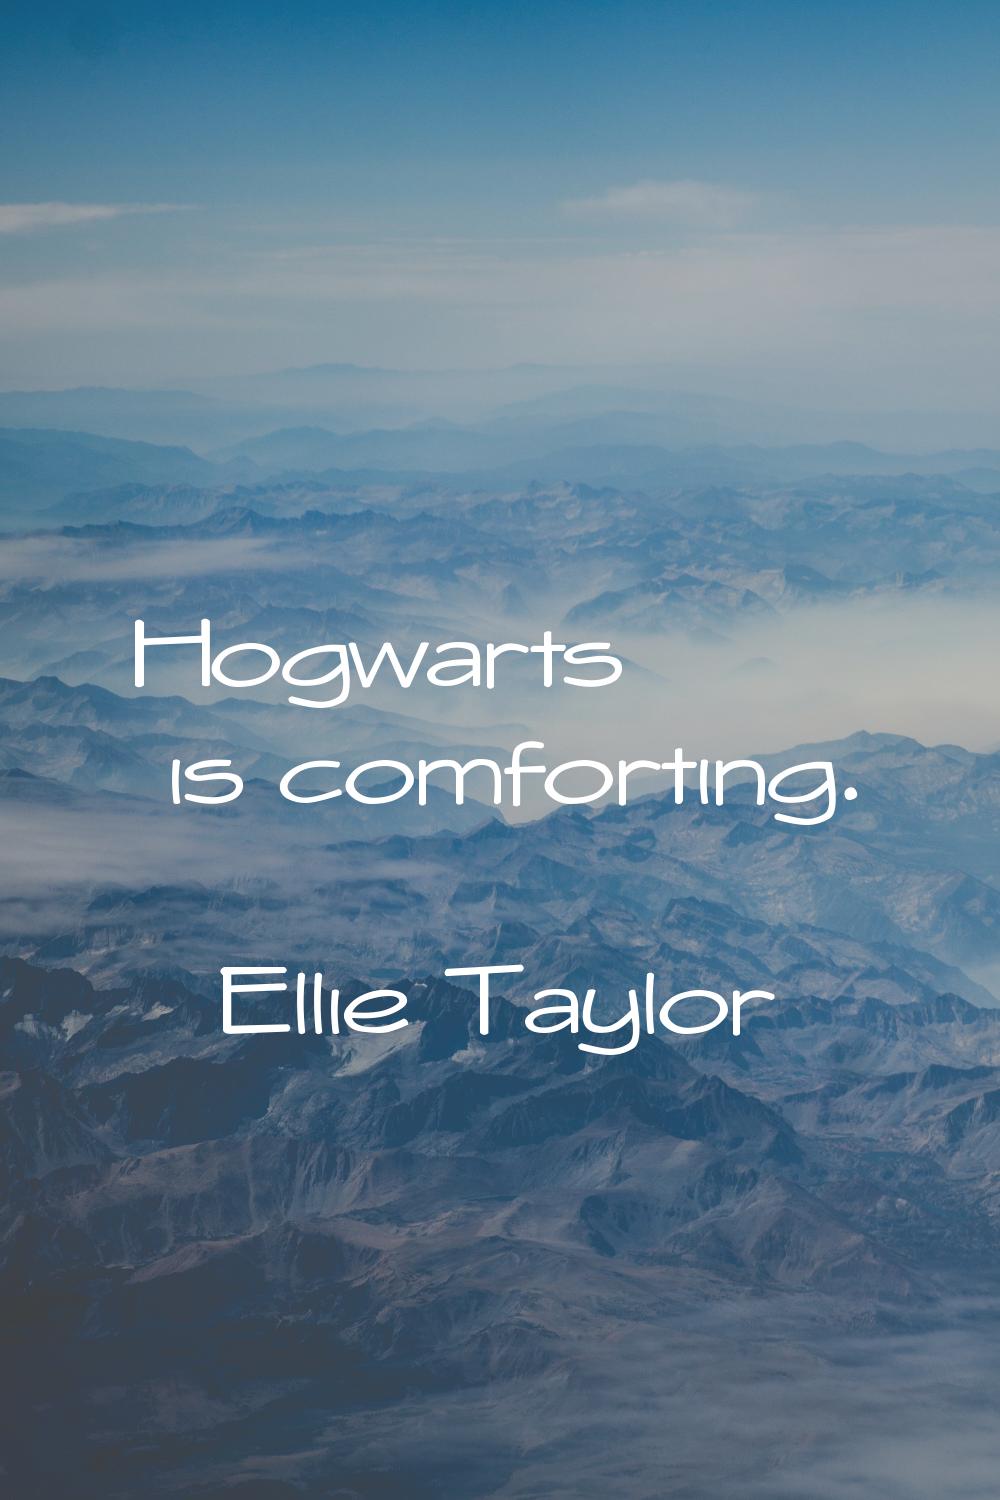 Hogwarts is comforting.